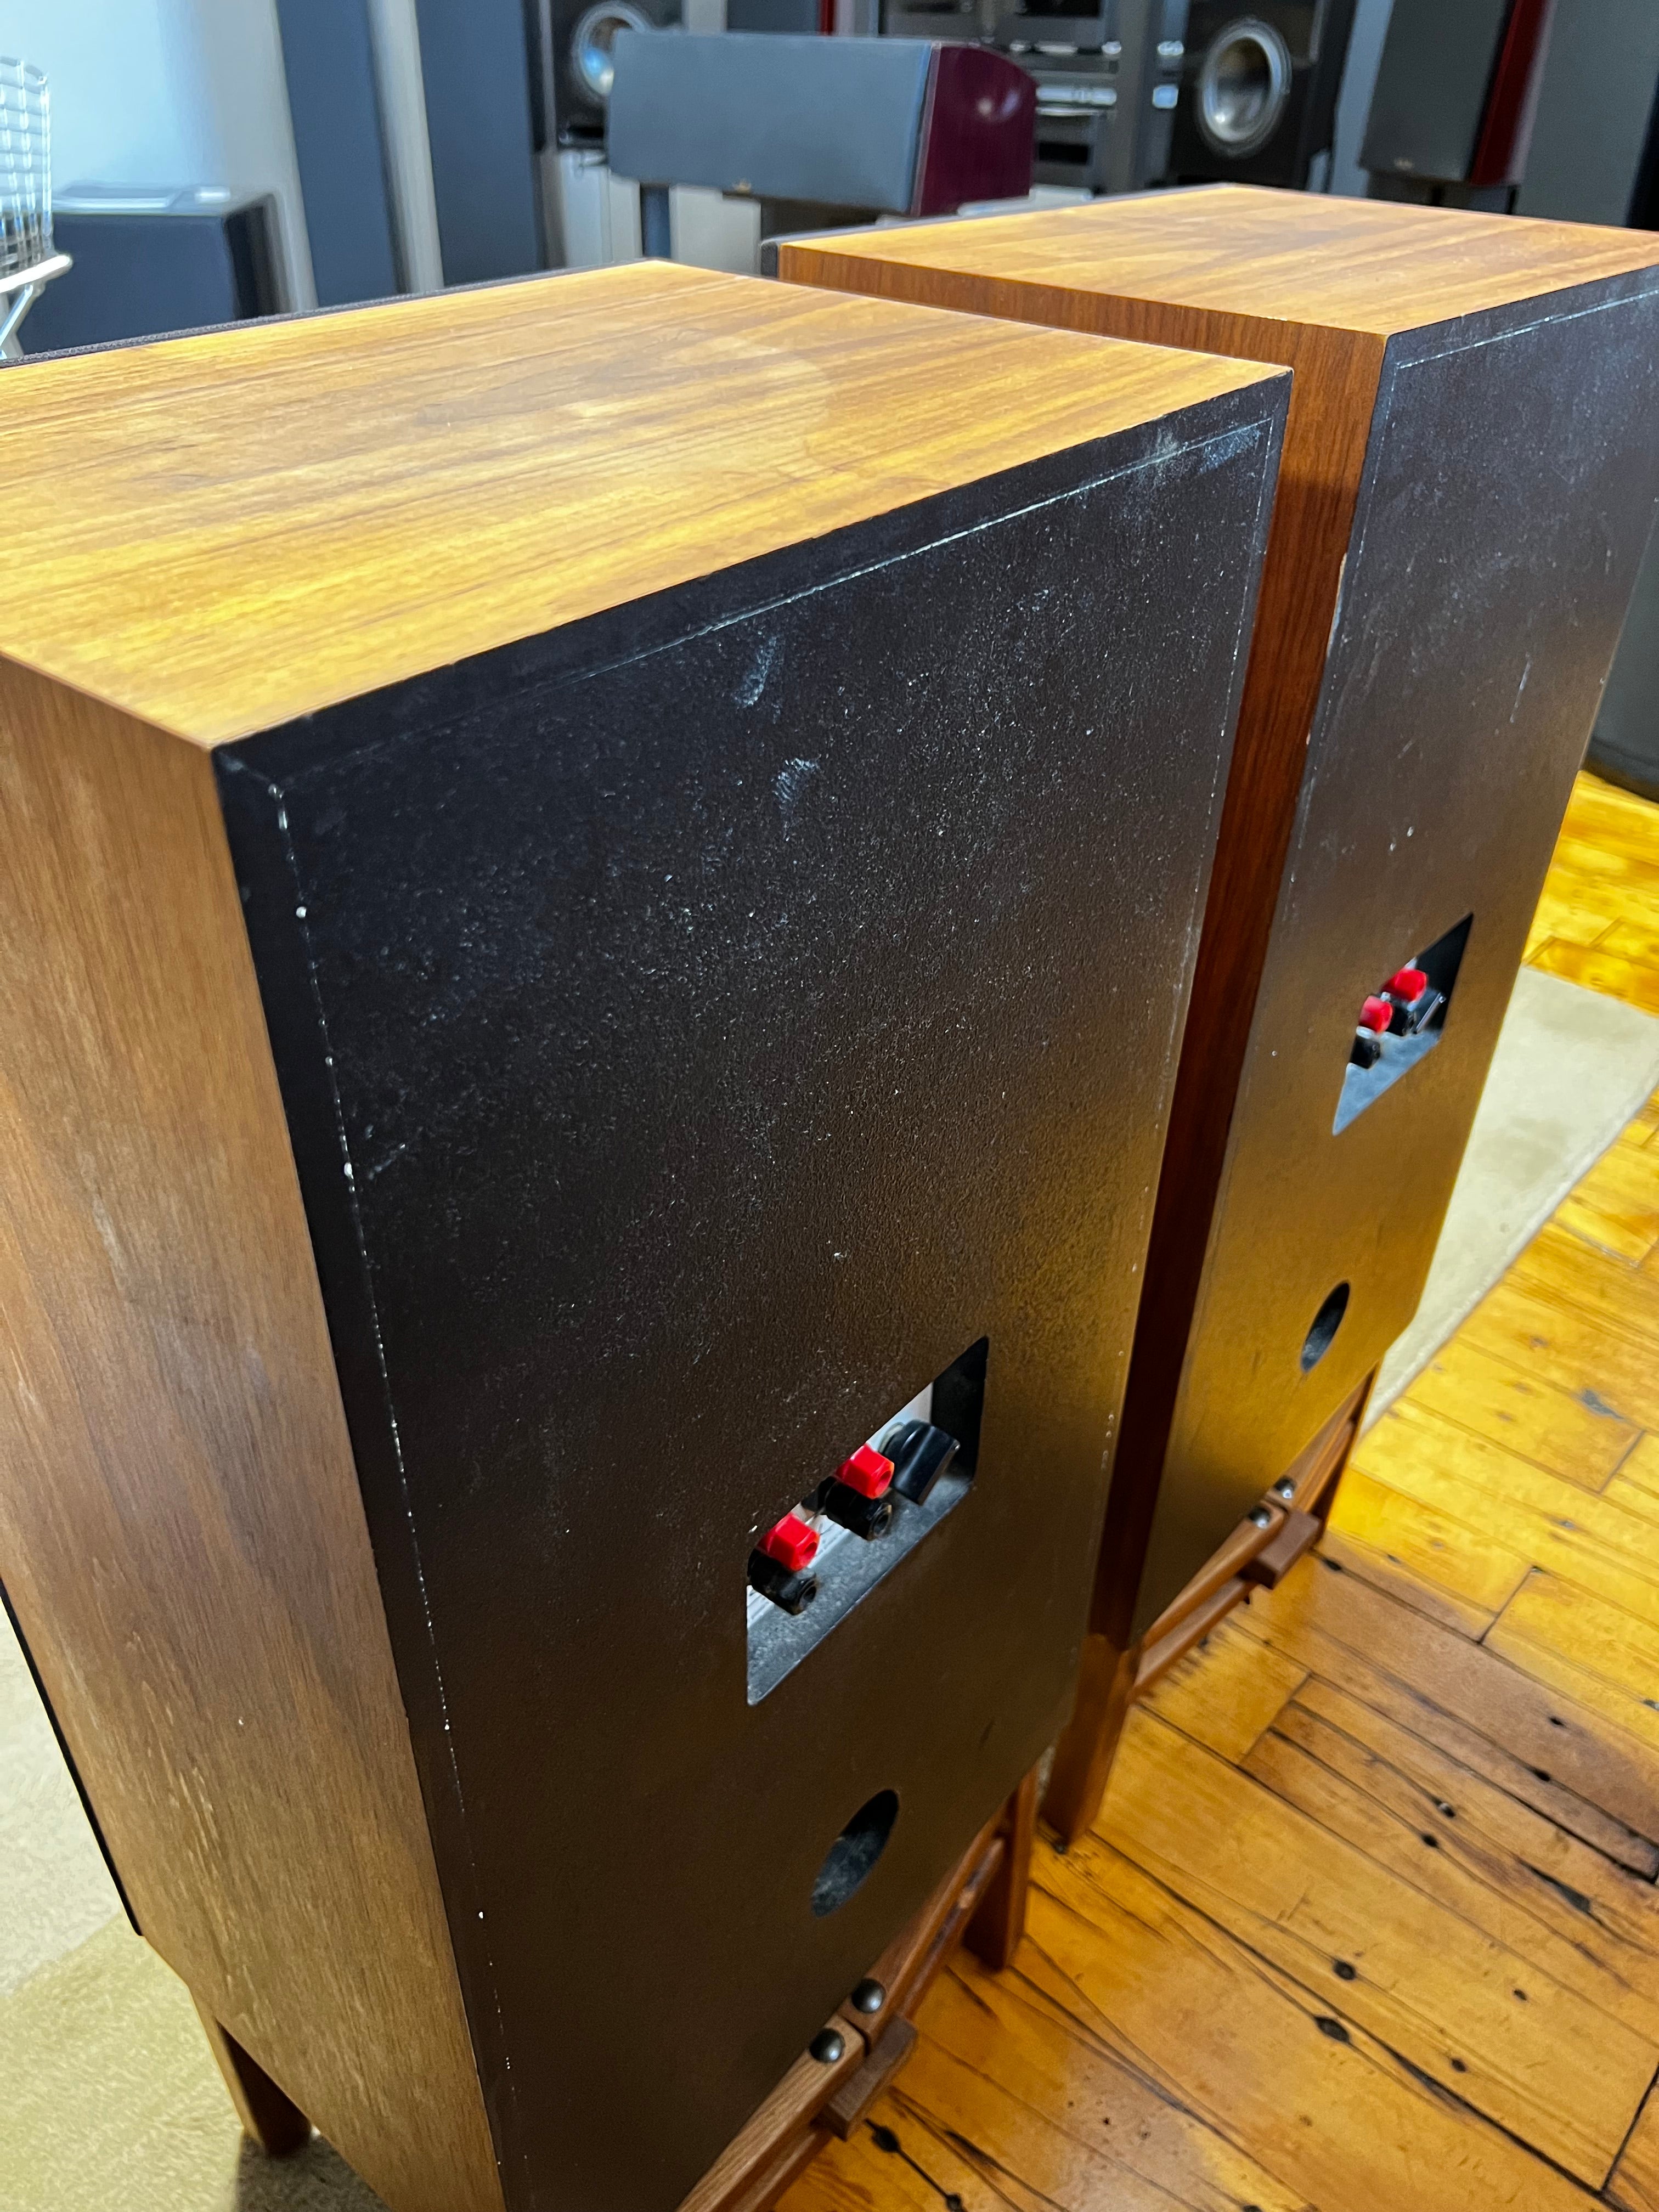 Snell Acoustics Type J-III Speakers, Beautiful Walnut Veneer - SOLD